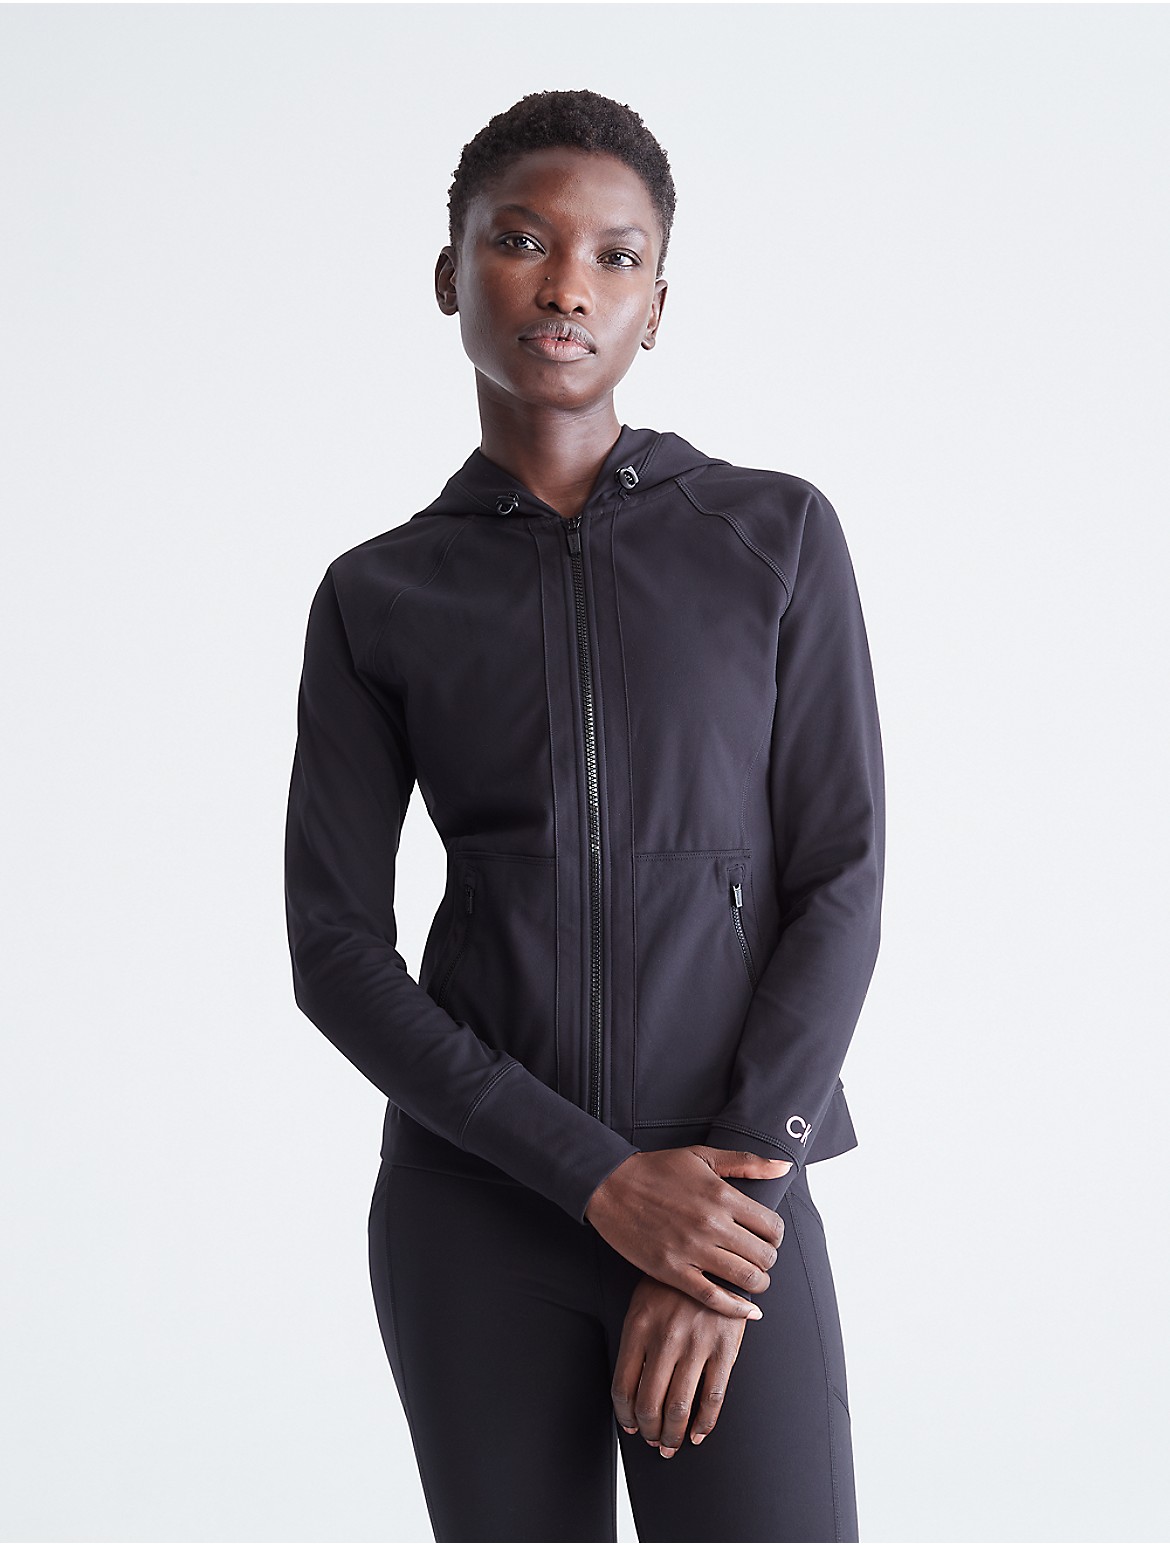 Calvin Klein Women's Performance Embrace Raglan Sleeve Jacket - Black - L